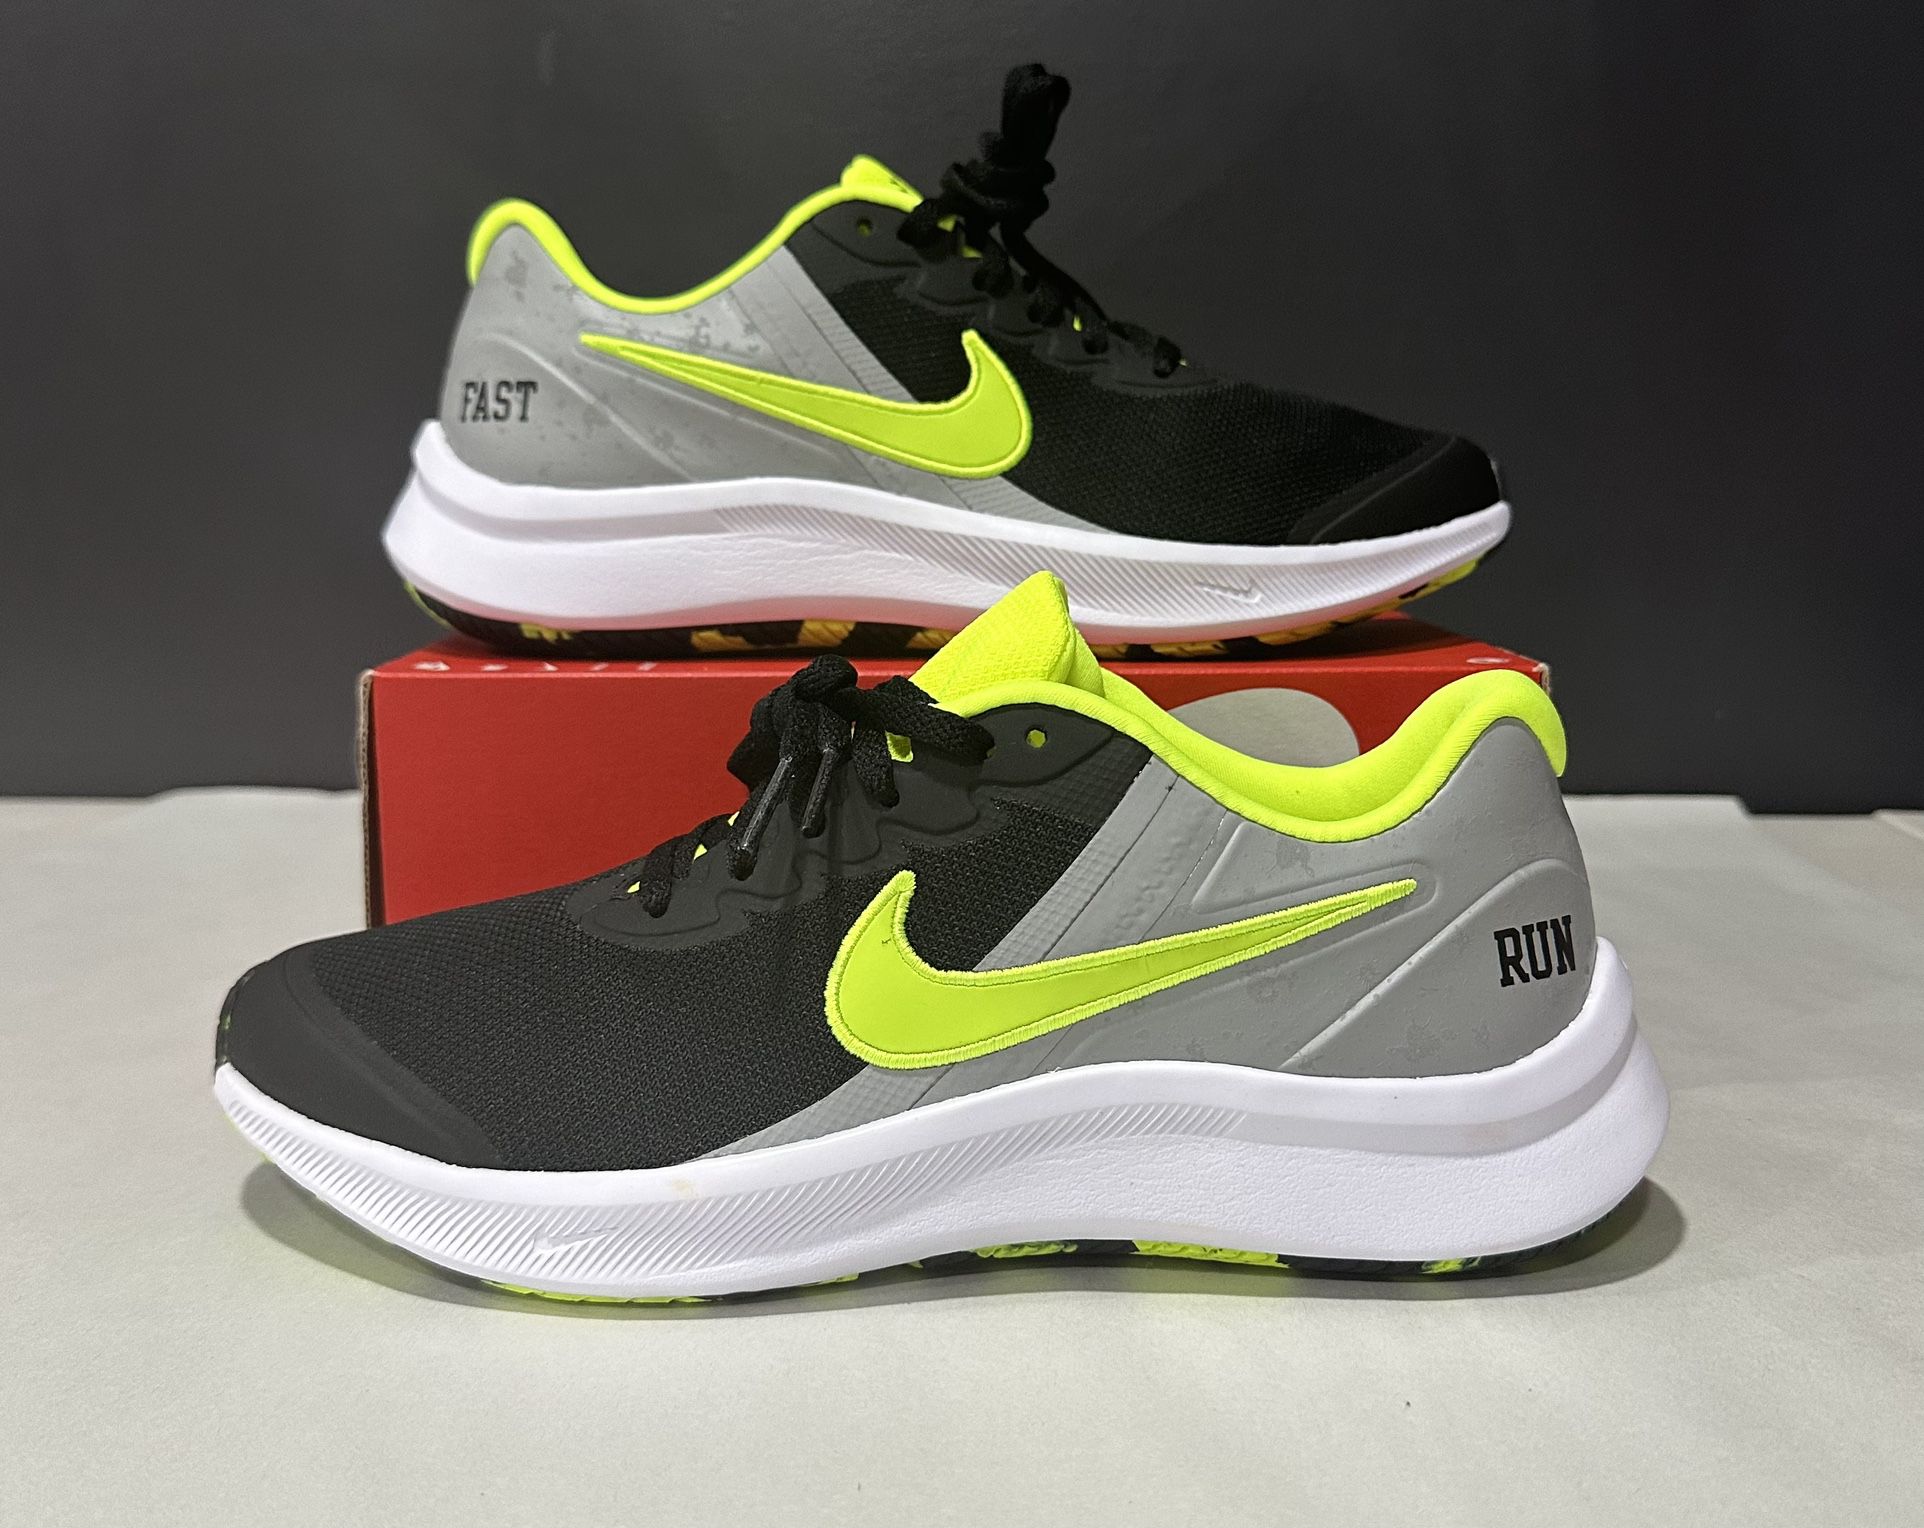 Size 6Y -  (GS) - Nike Star Runner 3 Low Black Grey Green